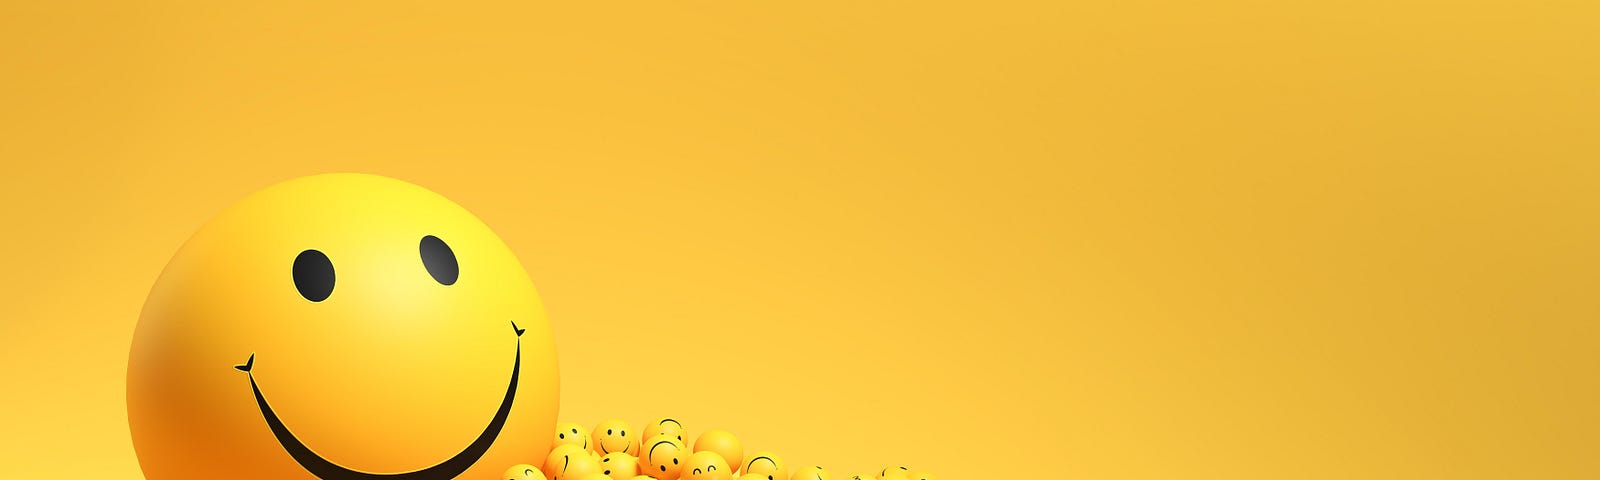 Smile emojis on a yellow background.